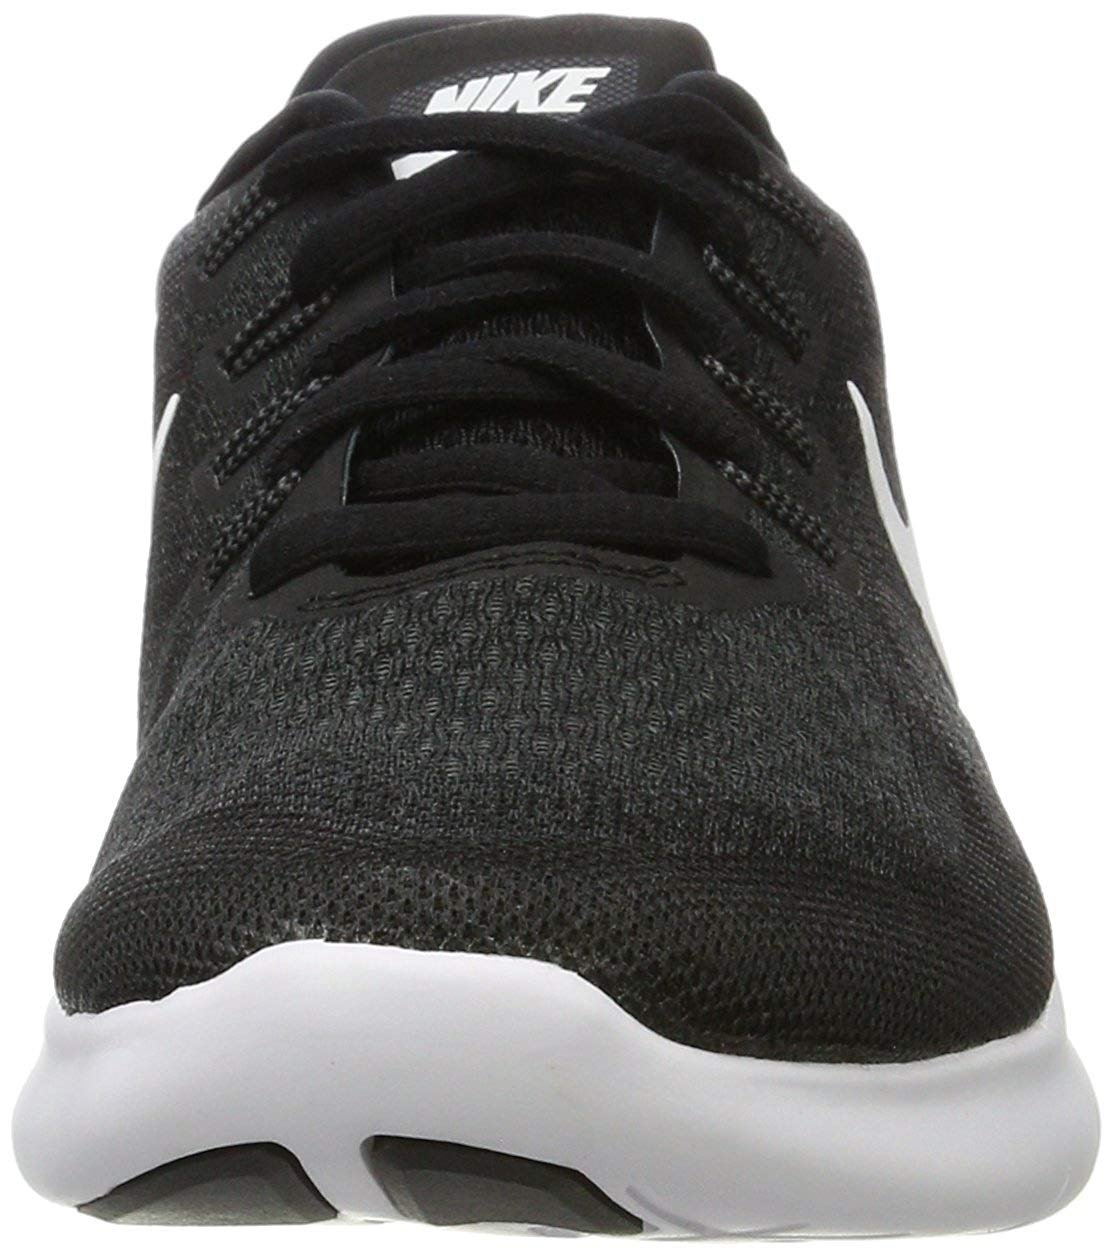 2017 running shoes (black/white, 12) - Walmart.com